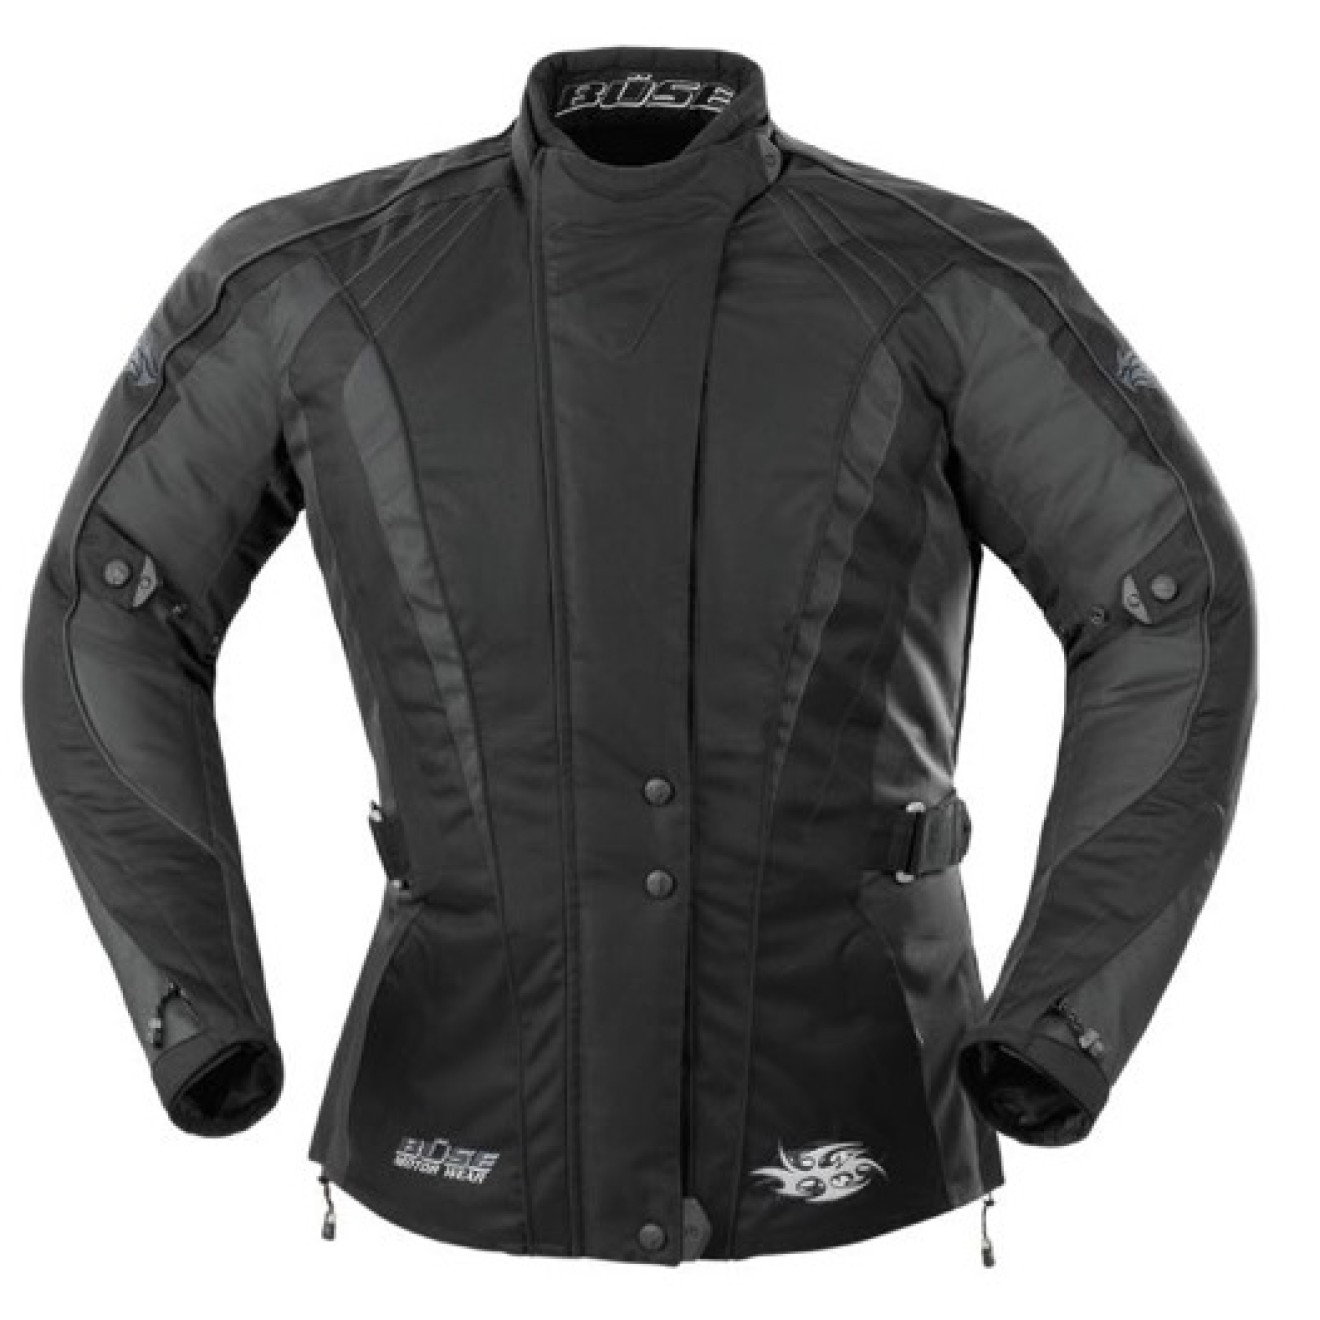 Carrara Jacke schwarz Gr.46